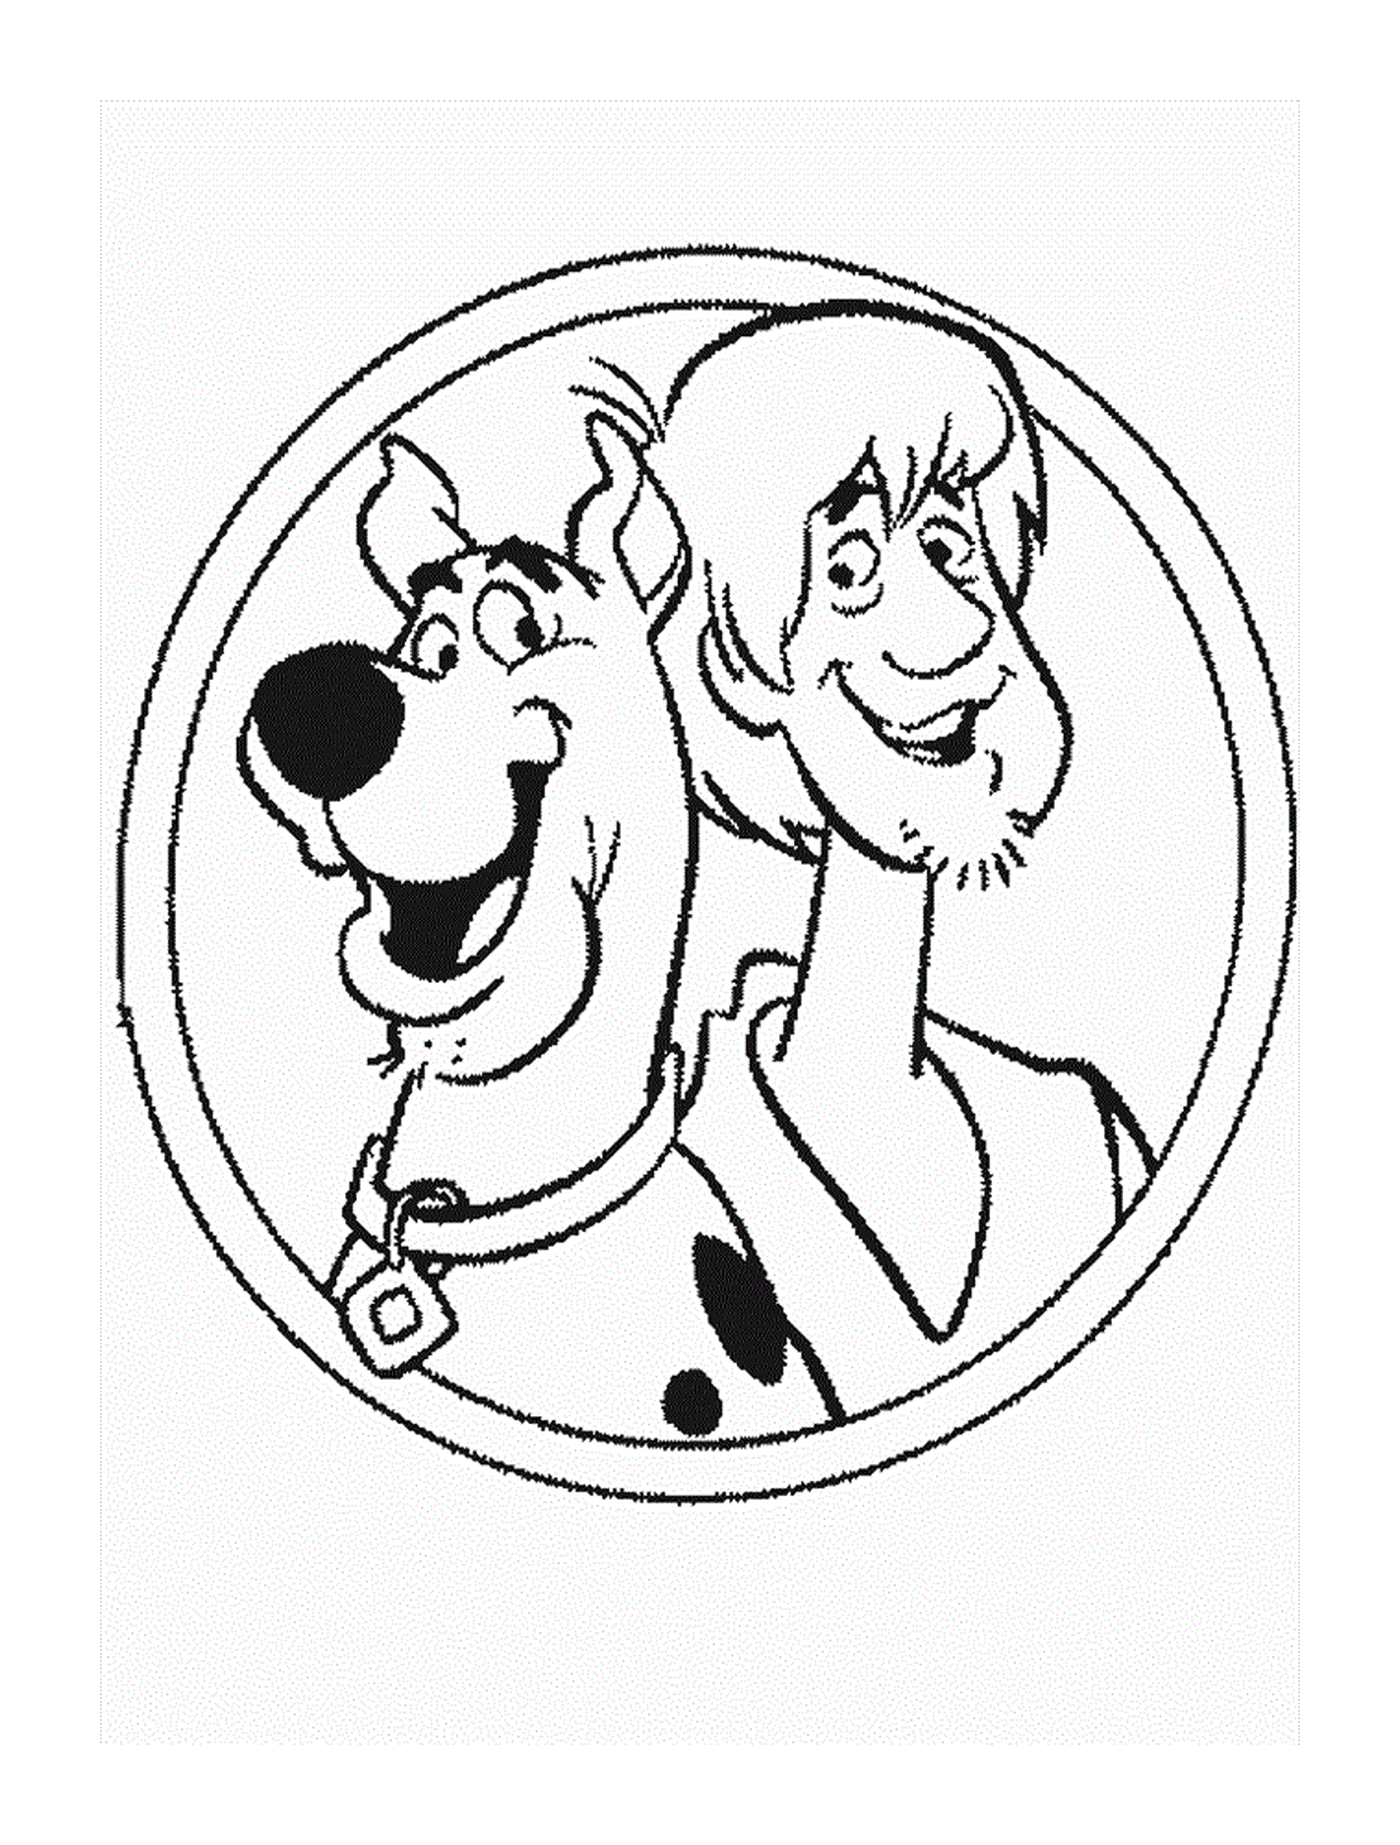  Shaggy und Scooby-Doo 